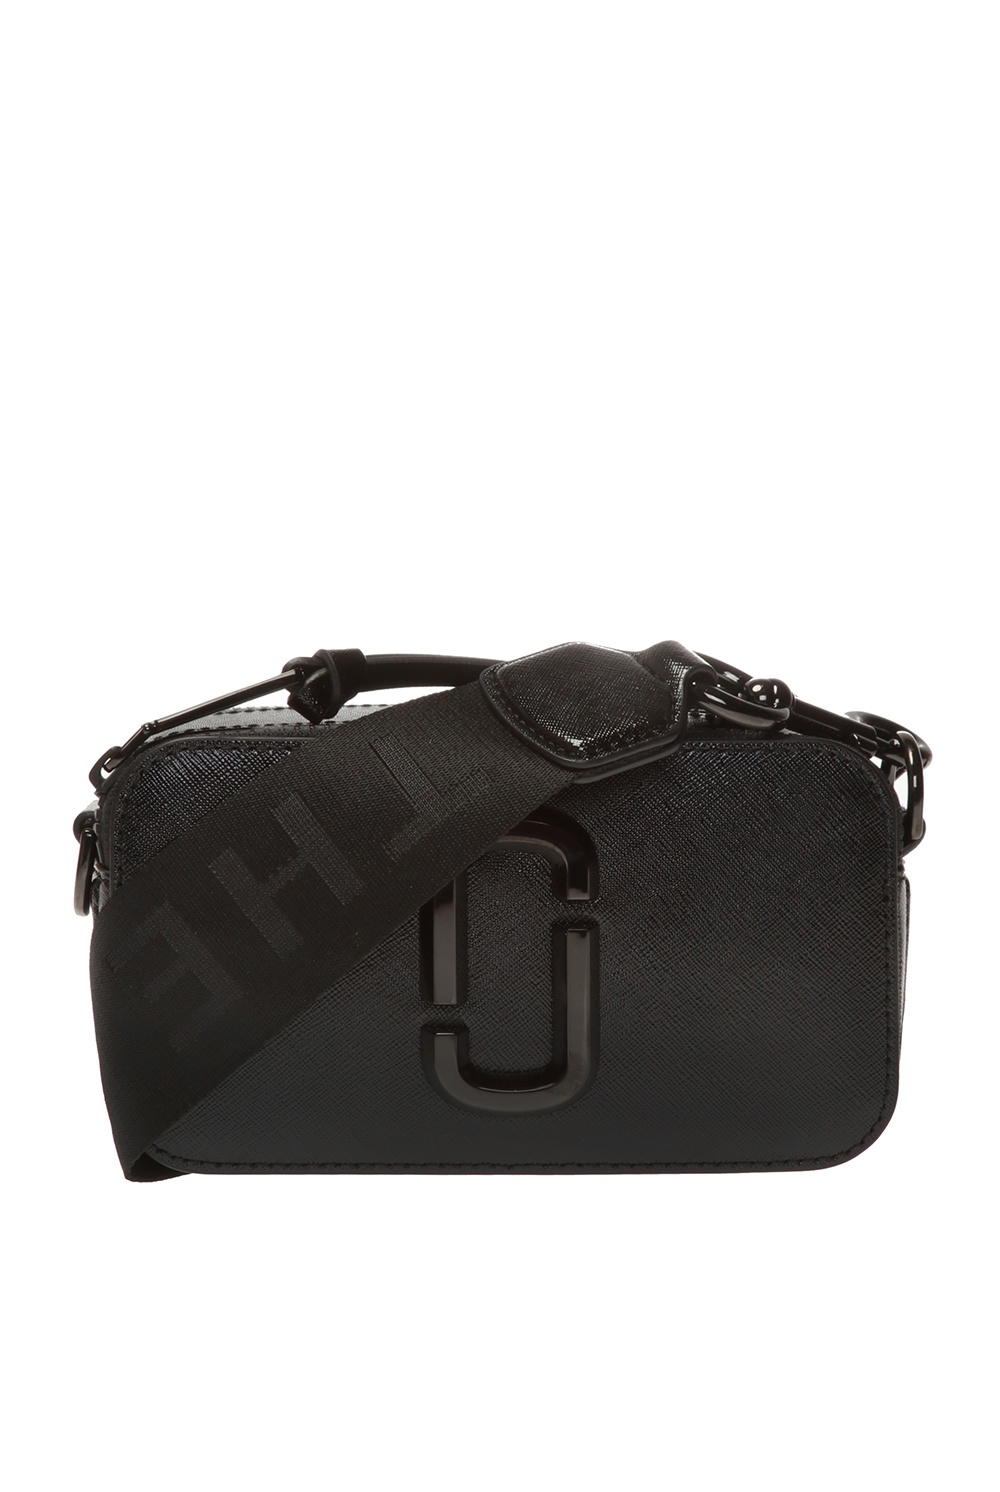 Black 'The Medium Tote' shoulder bag Marc Jacobs - Vitkac GB